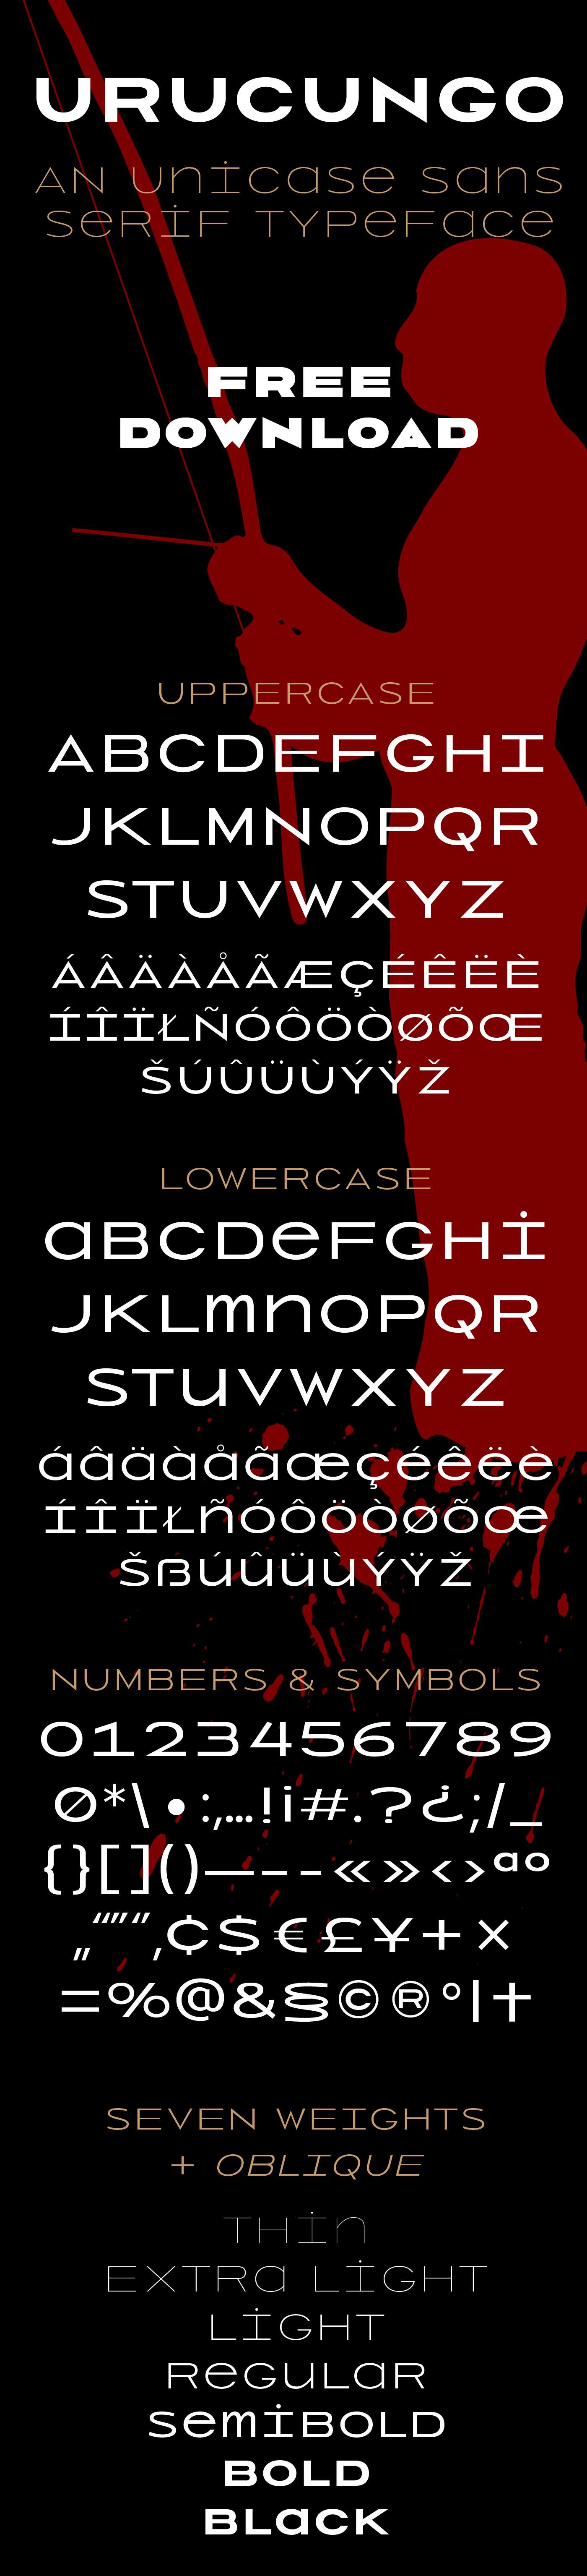 free Typeface font sans serif free download unicase logo black